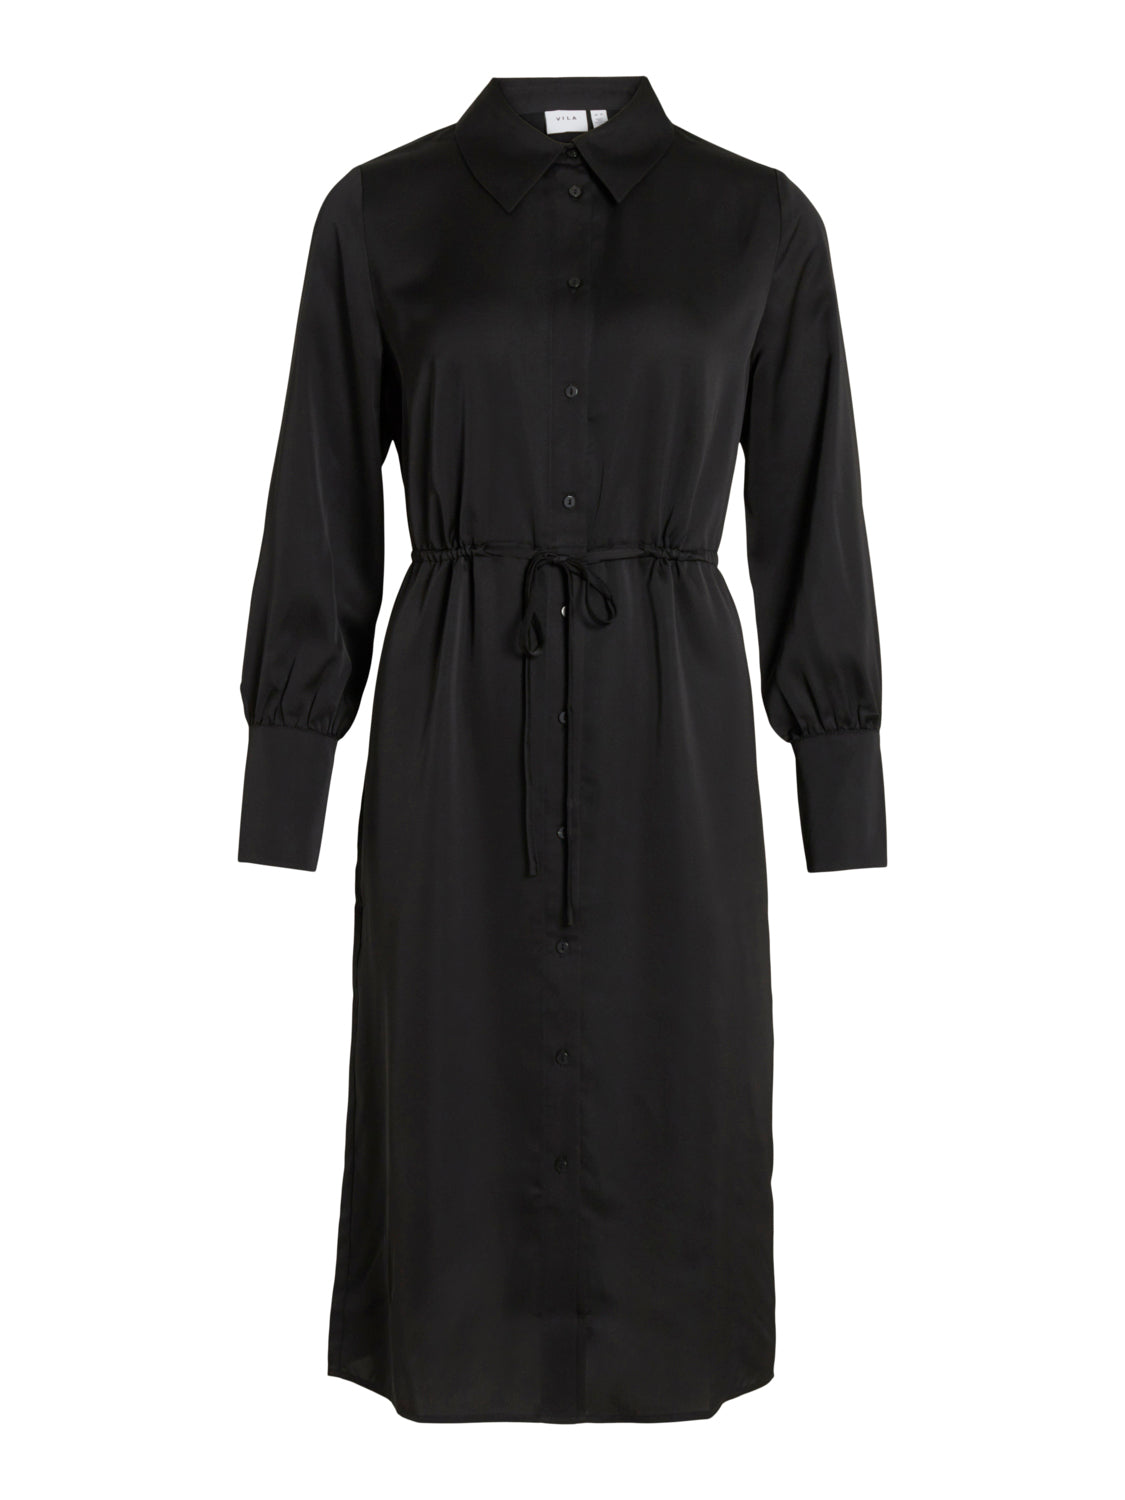 VIELLETTE Dress - Black